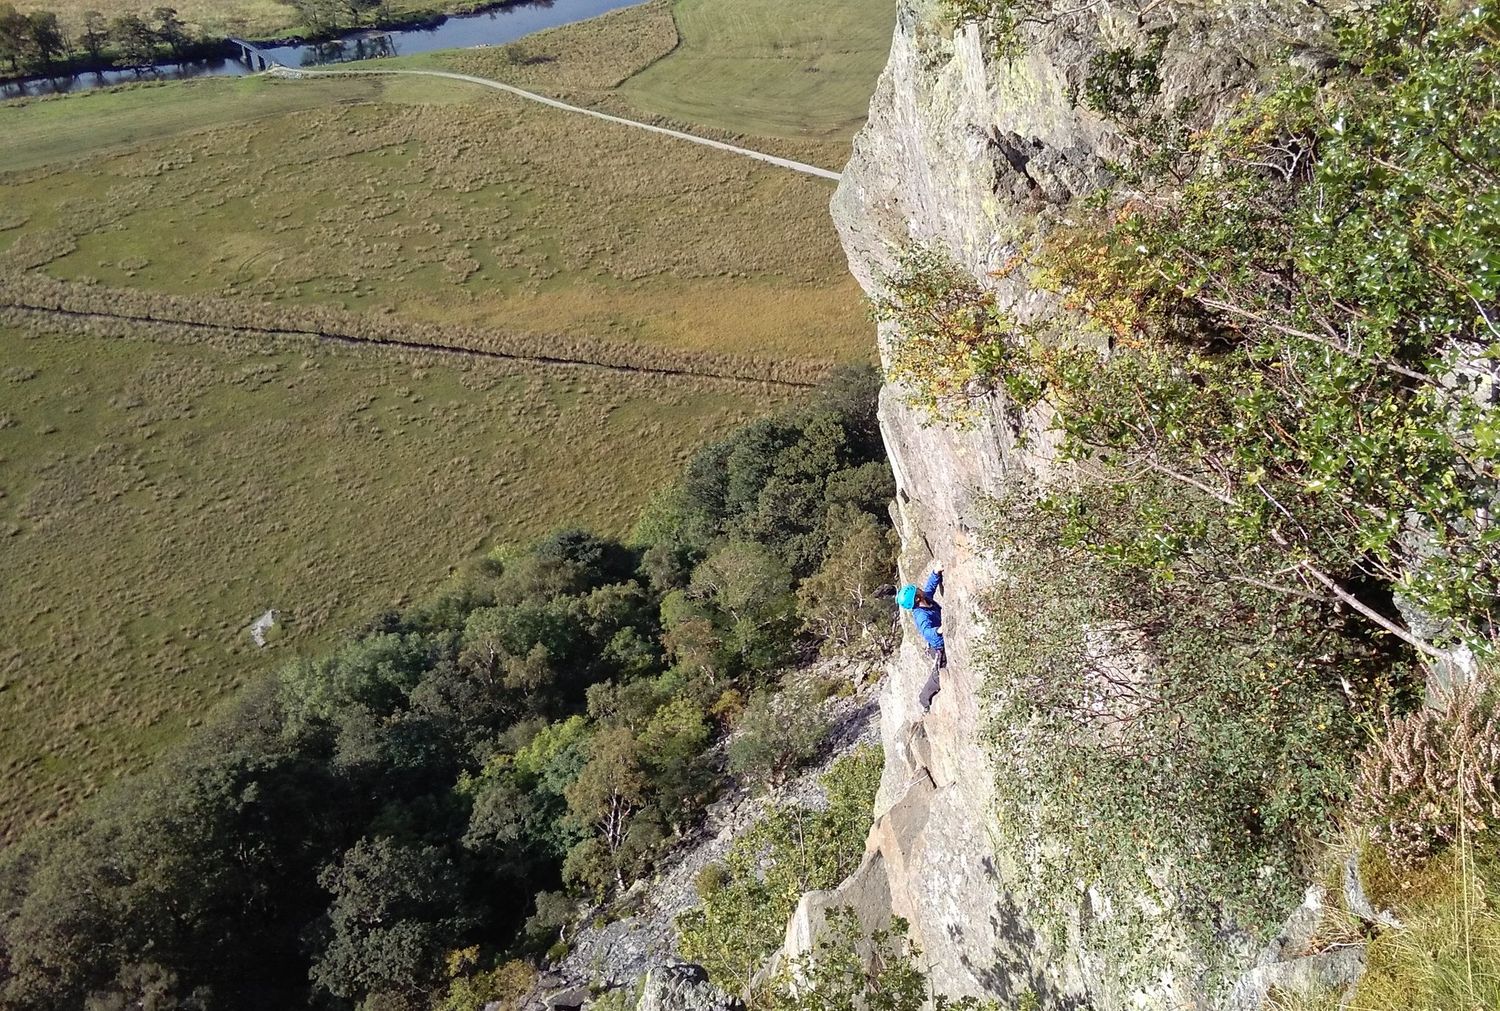  Rock climbing on Shepherd’s Crag, Borrowdale - Chris Ensoll Mountain Guide 